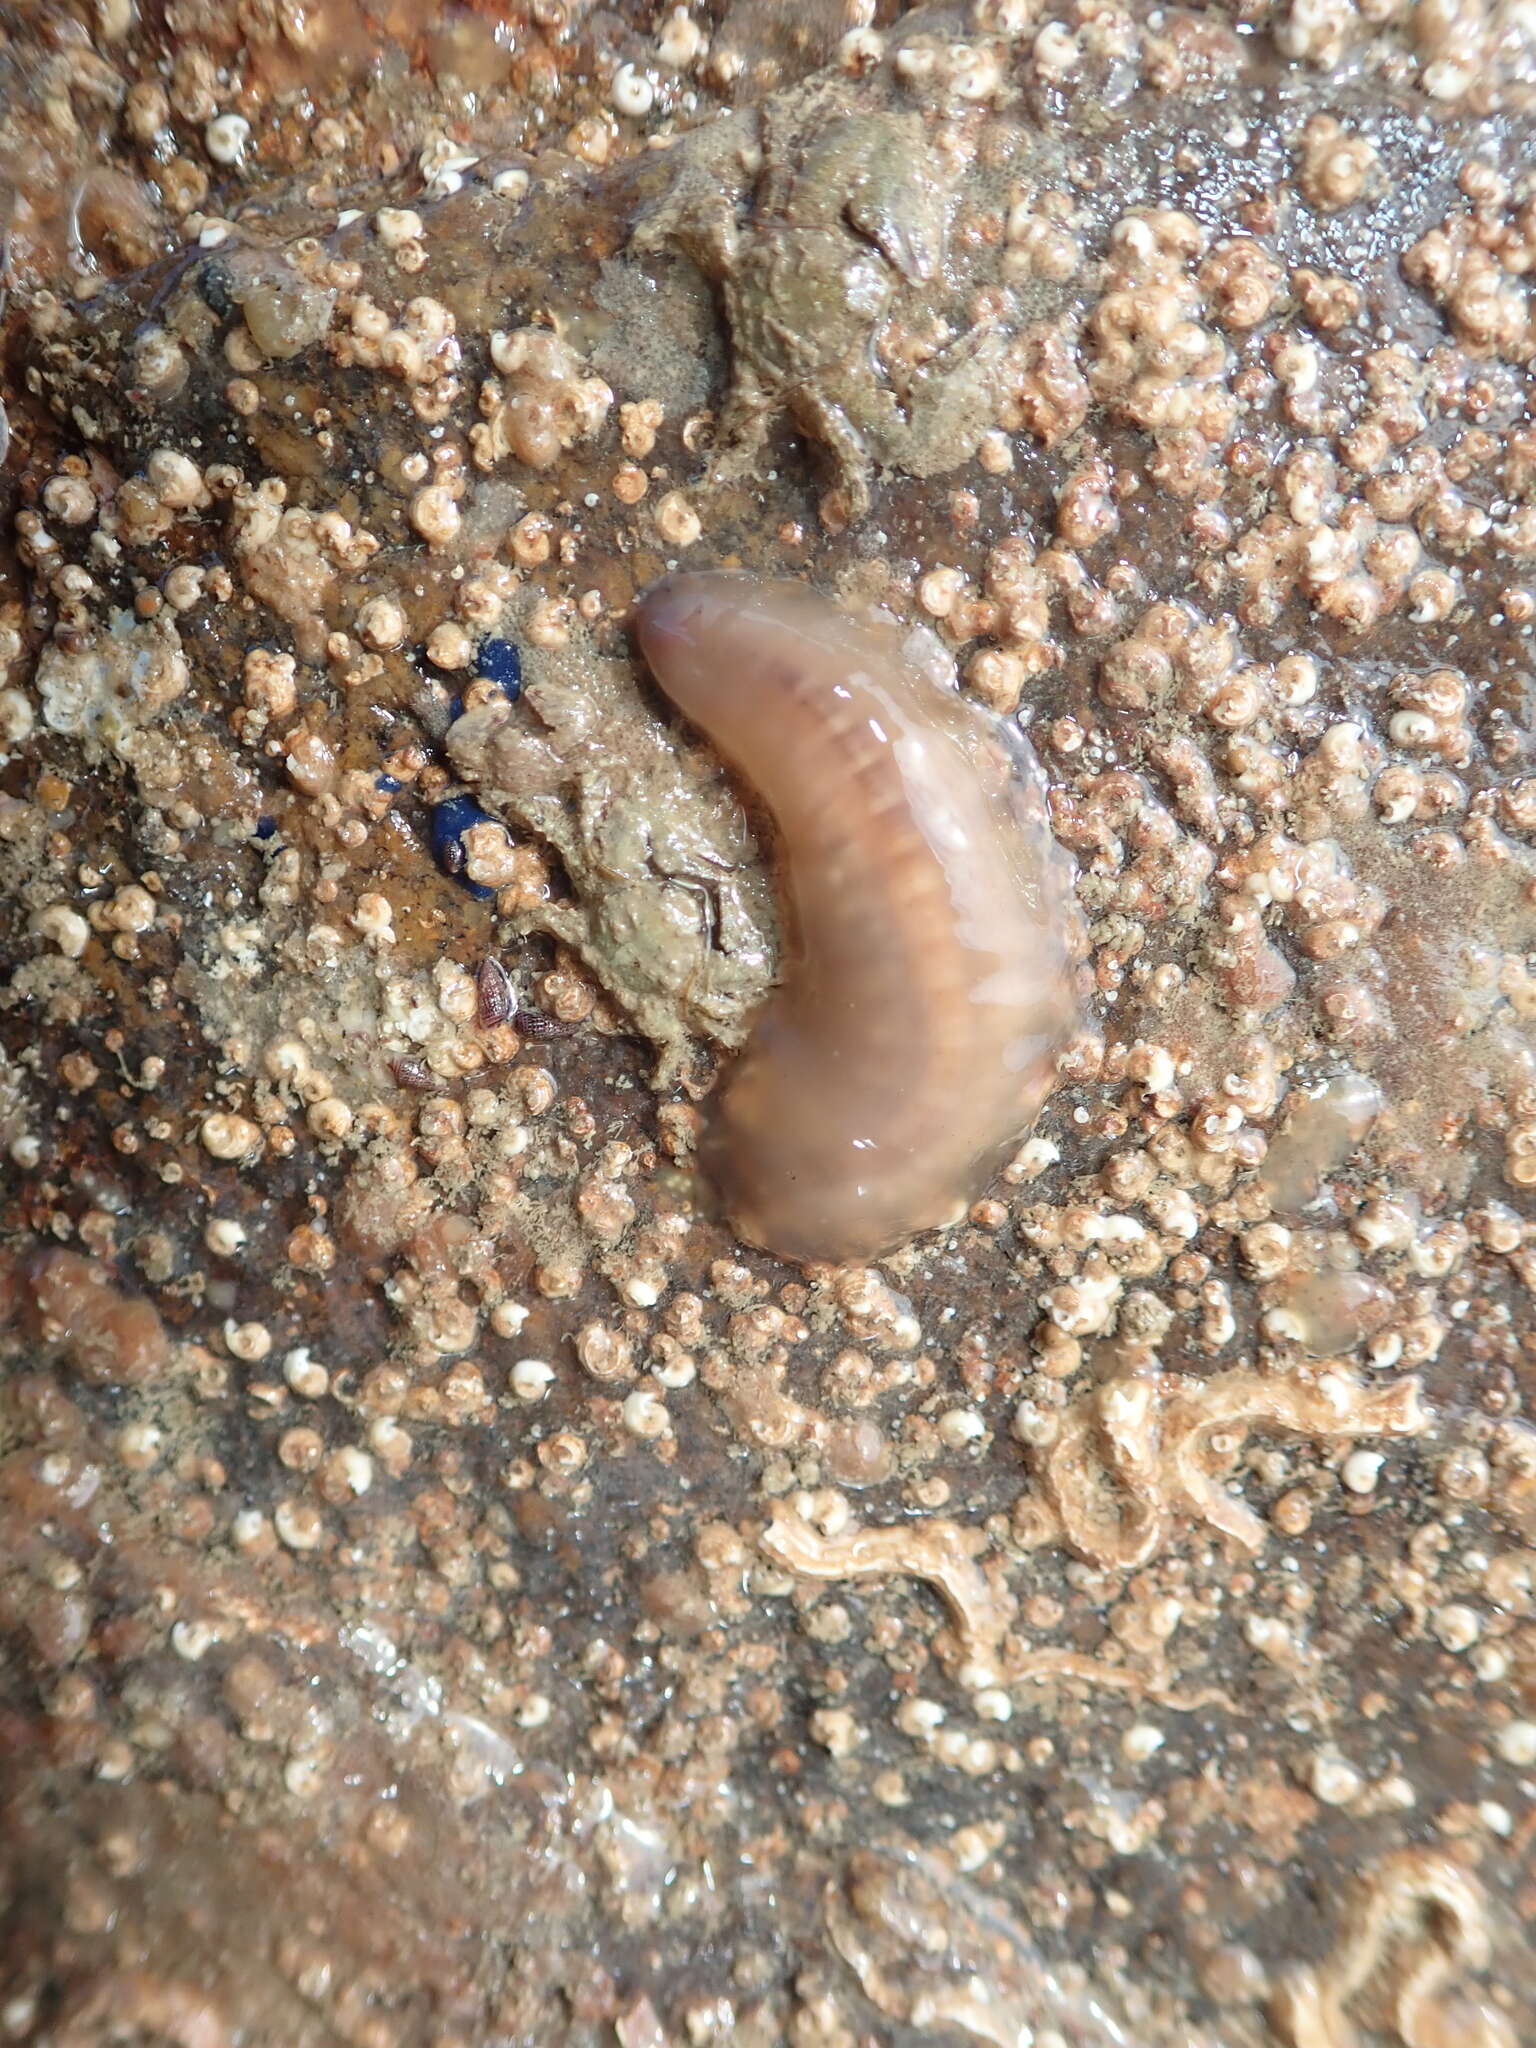 gelatinous scale worm - Encyclopedia of Life